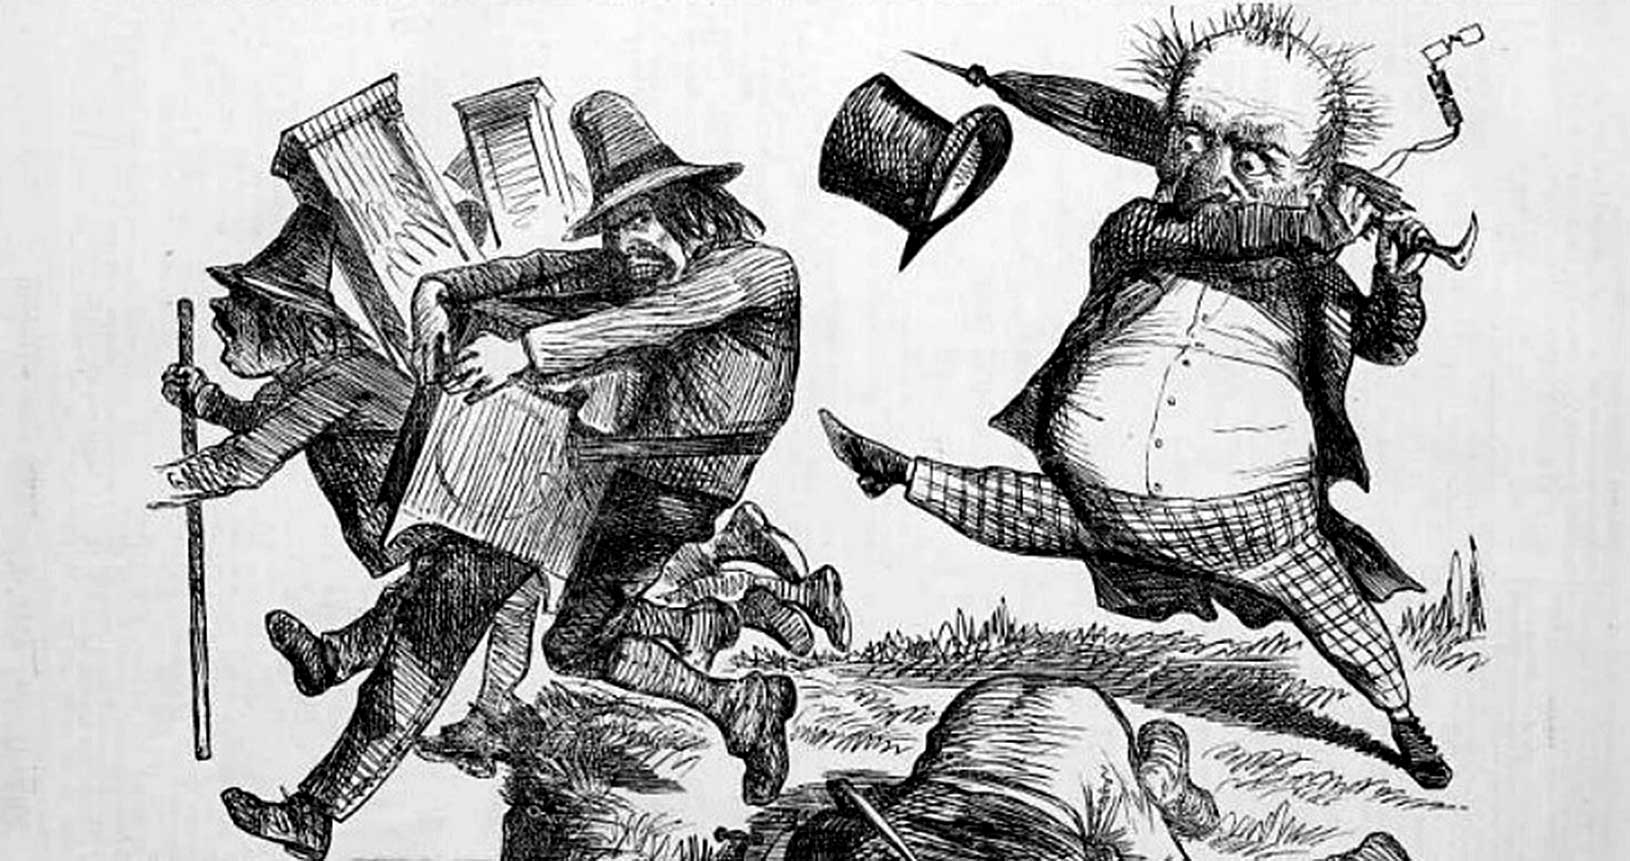 Kampf des Bürgertums gegen wandernde Straßenmusiker in England, Zeichung Zeitschrift "Punch" (1866) - Public Domain